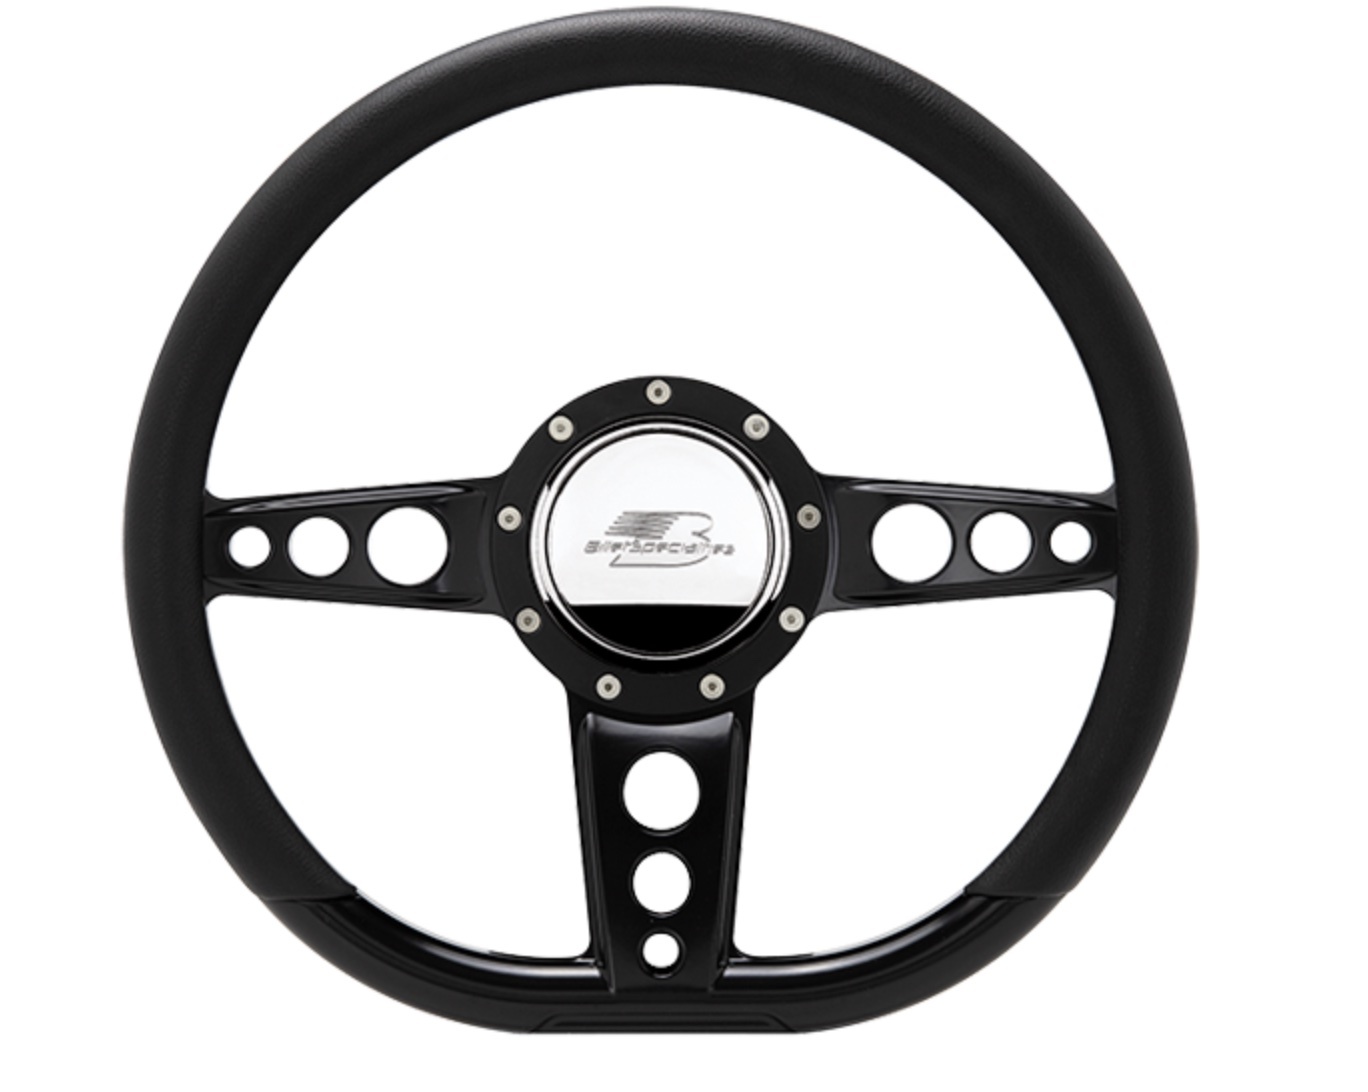 Billet Specialities BLK29427 Steering Wheel, Trans Am, 14 in Diameter, D-Shaped, 2 in Dish, 3-Spoke, Milled Finger Notches, Aluminum, Black Anodized, Each